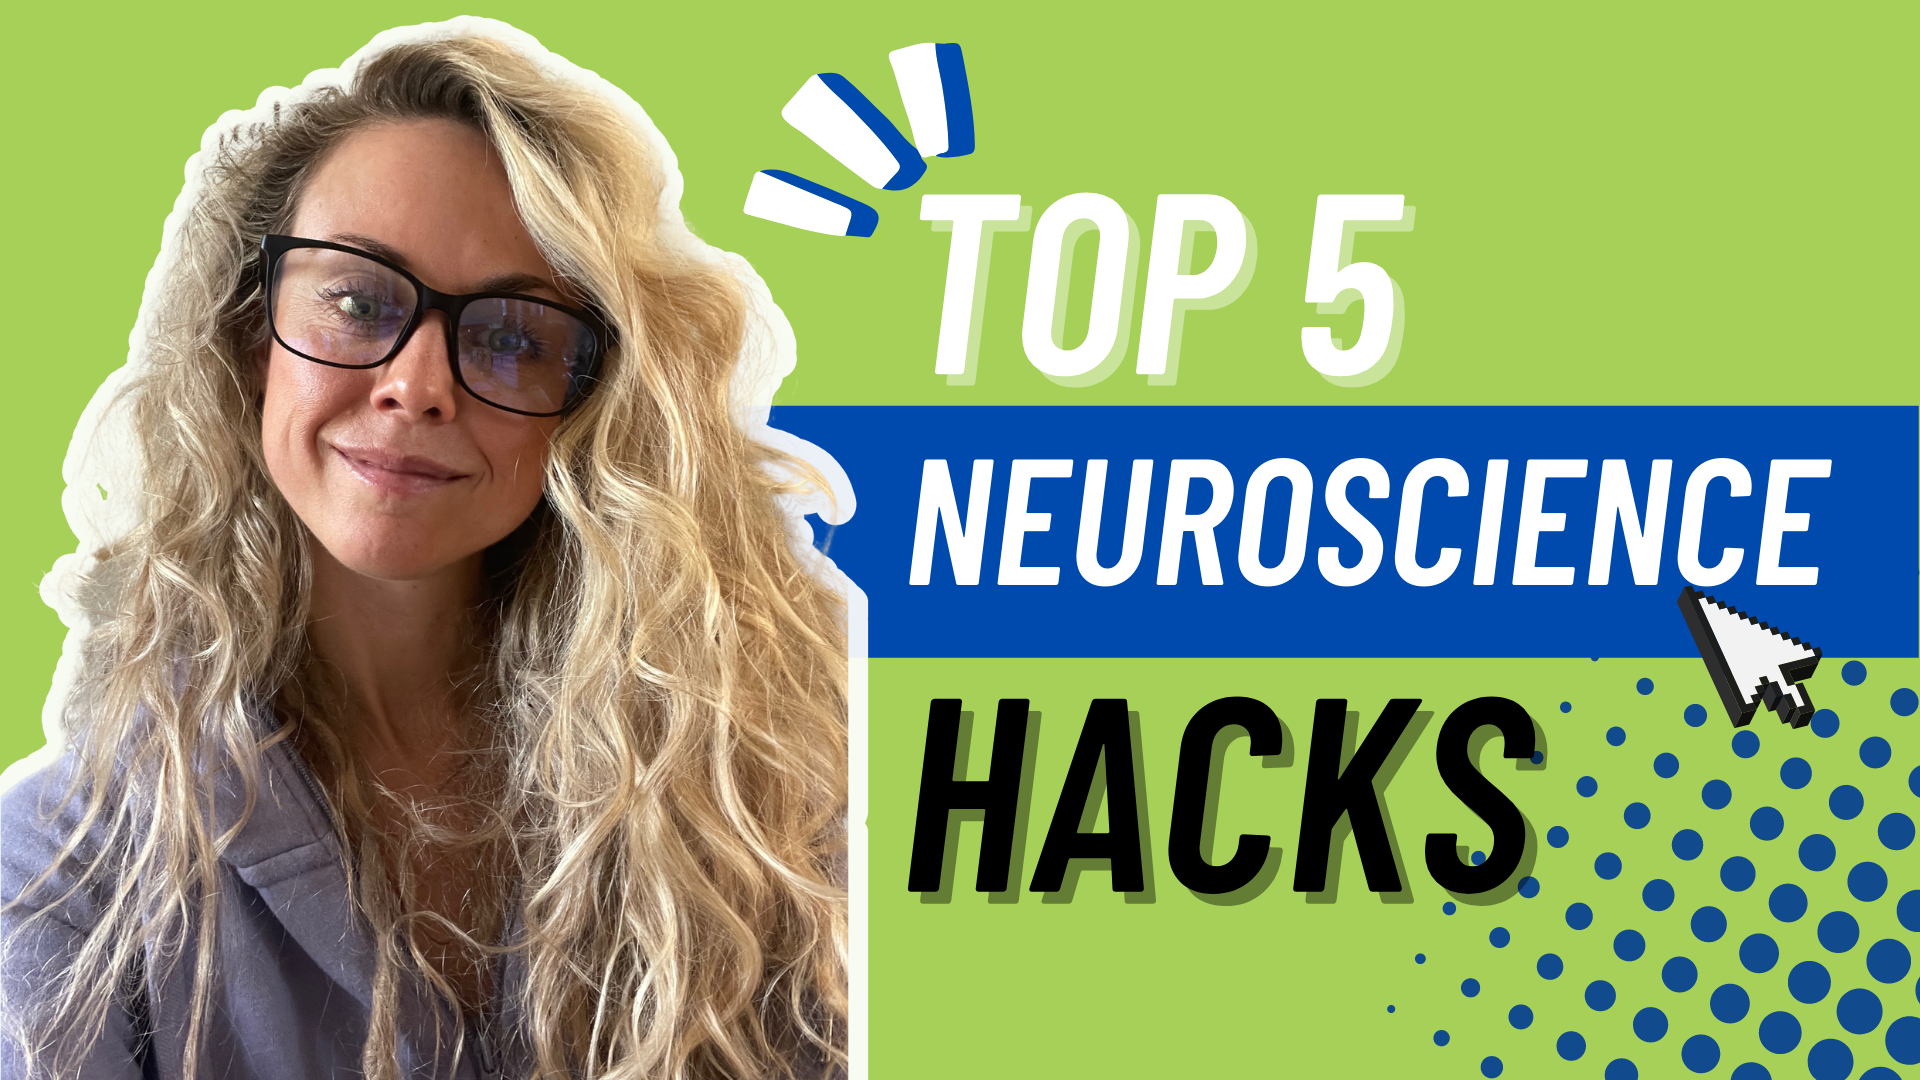 Top 5 Neuroscience Hacks